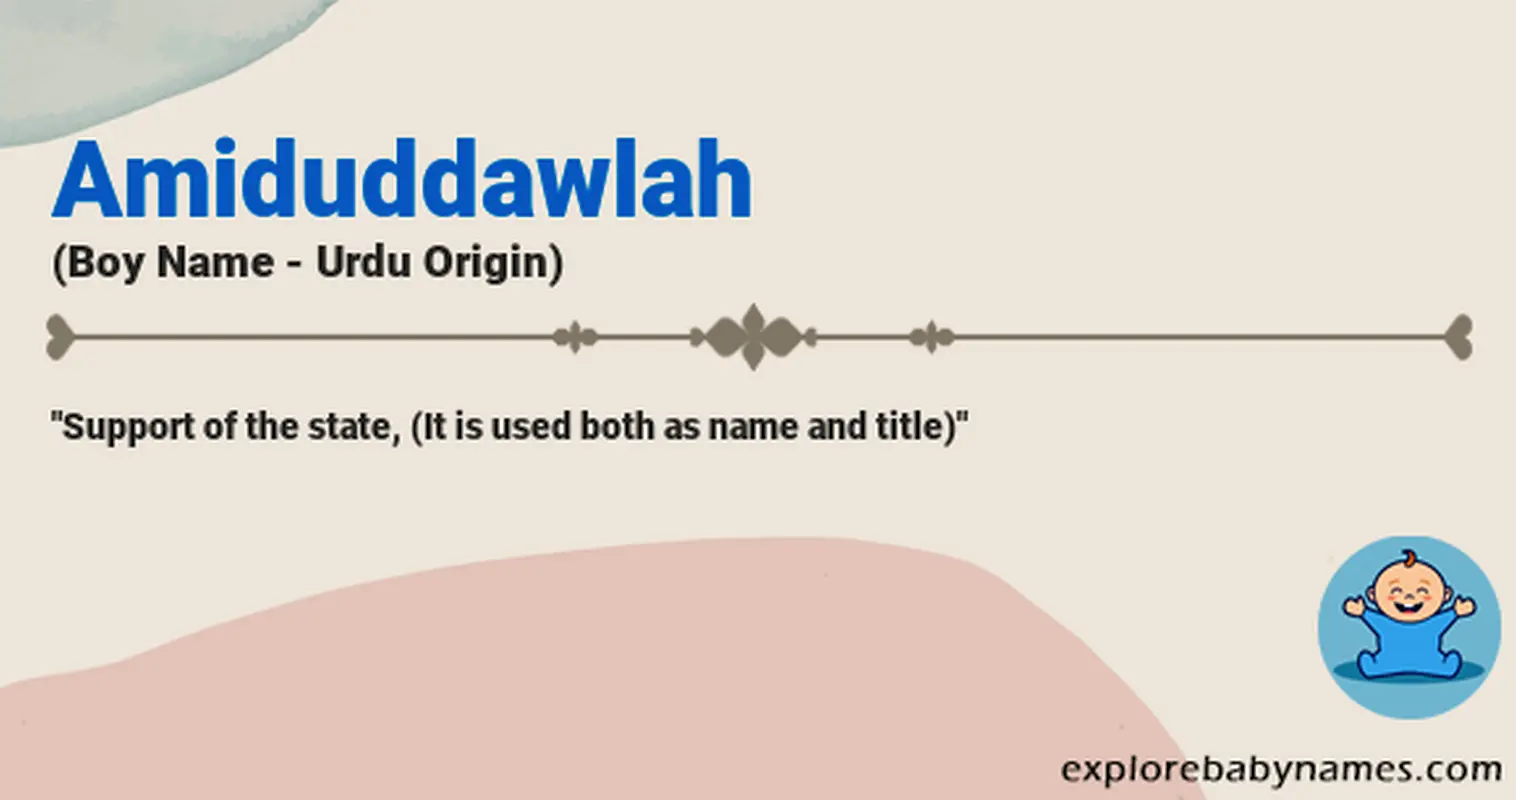 Meaning of Amiduddawlah